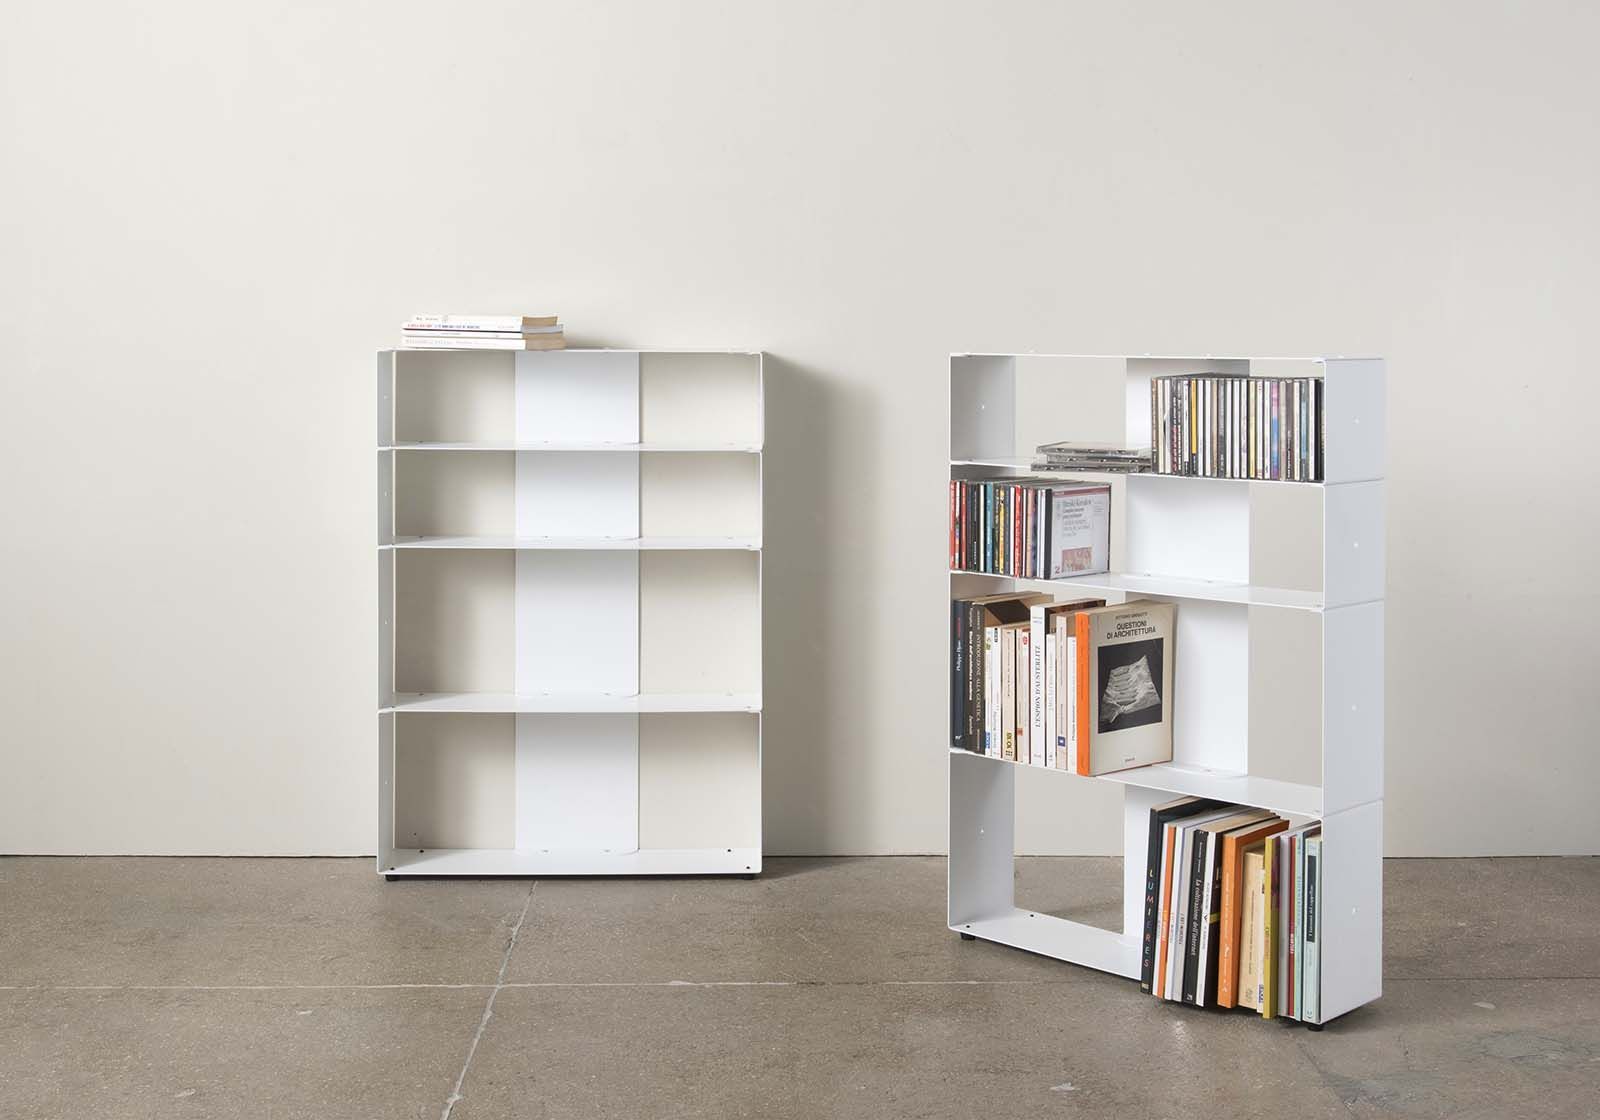 Librerias muebles 60 cm para libros, Cds - metal blanco - 4 niveles